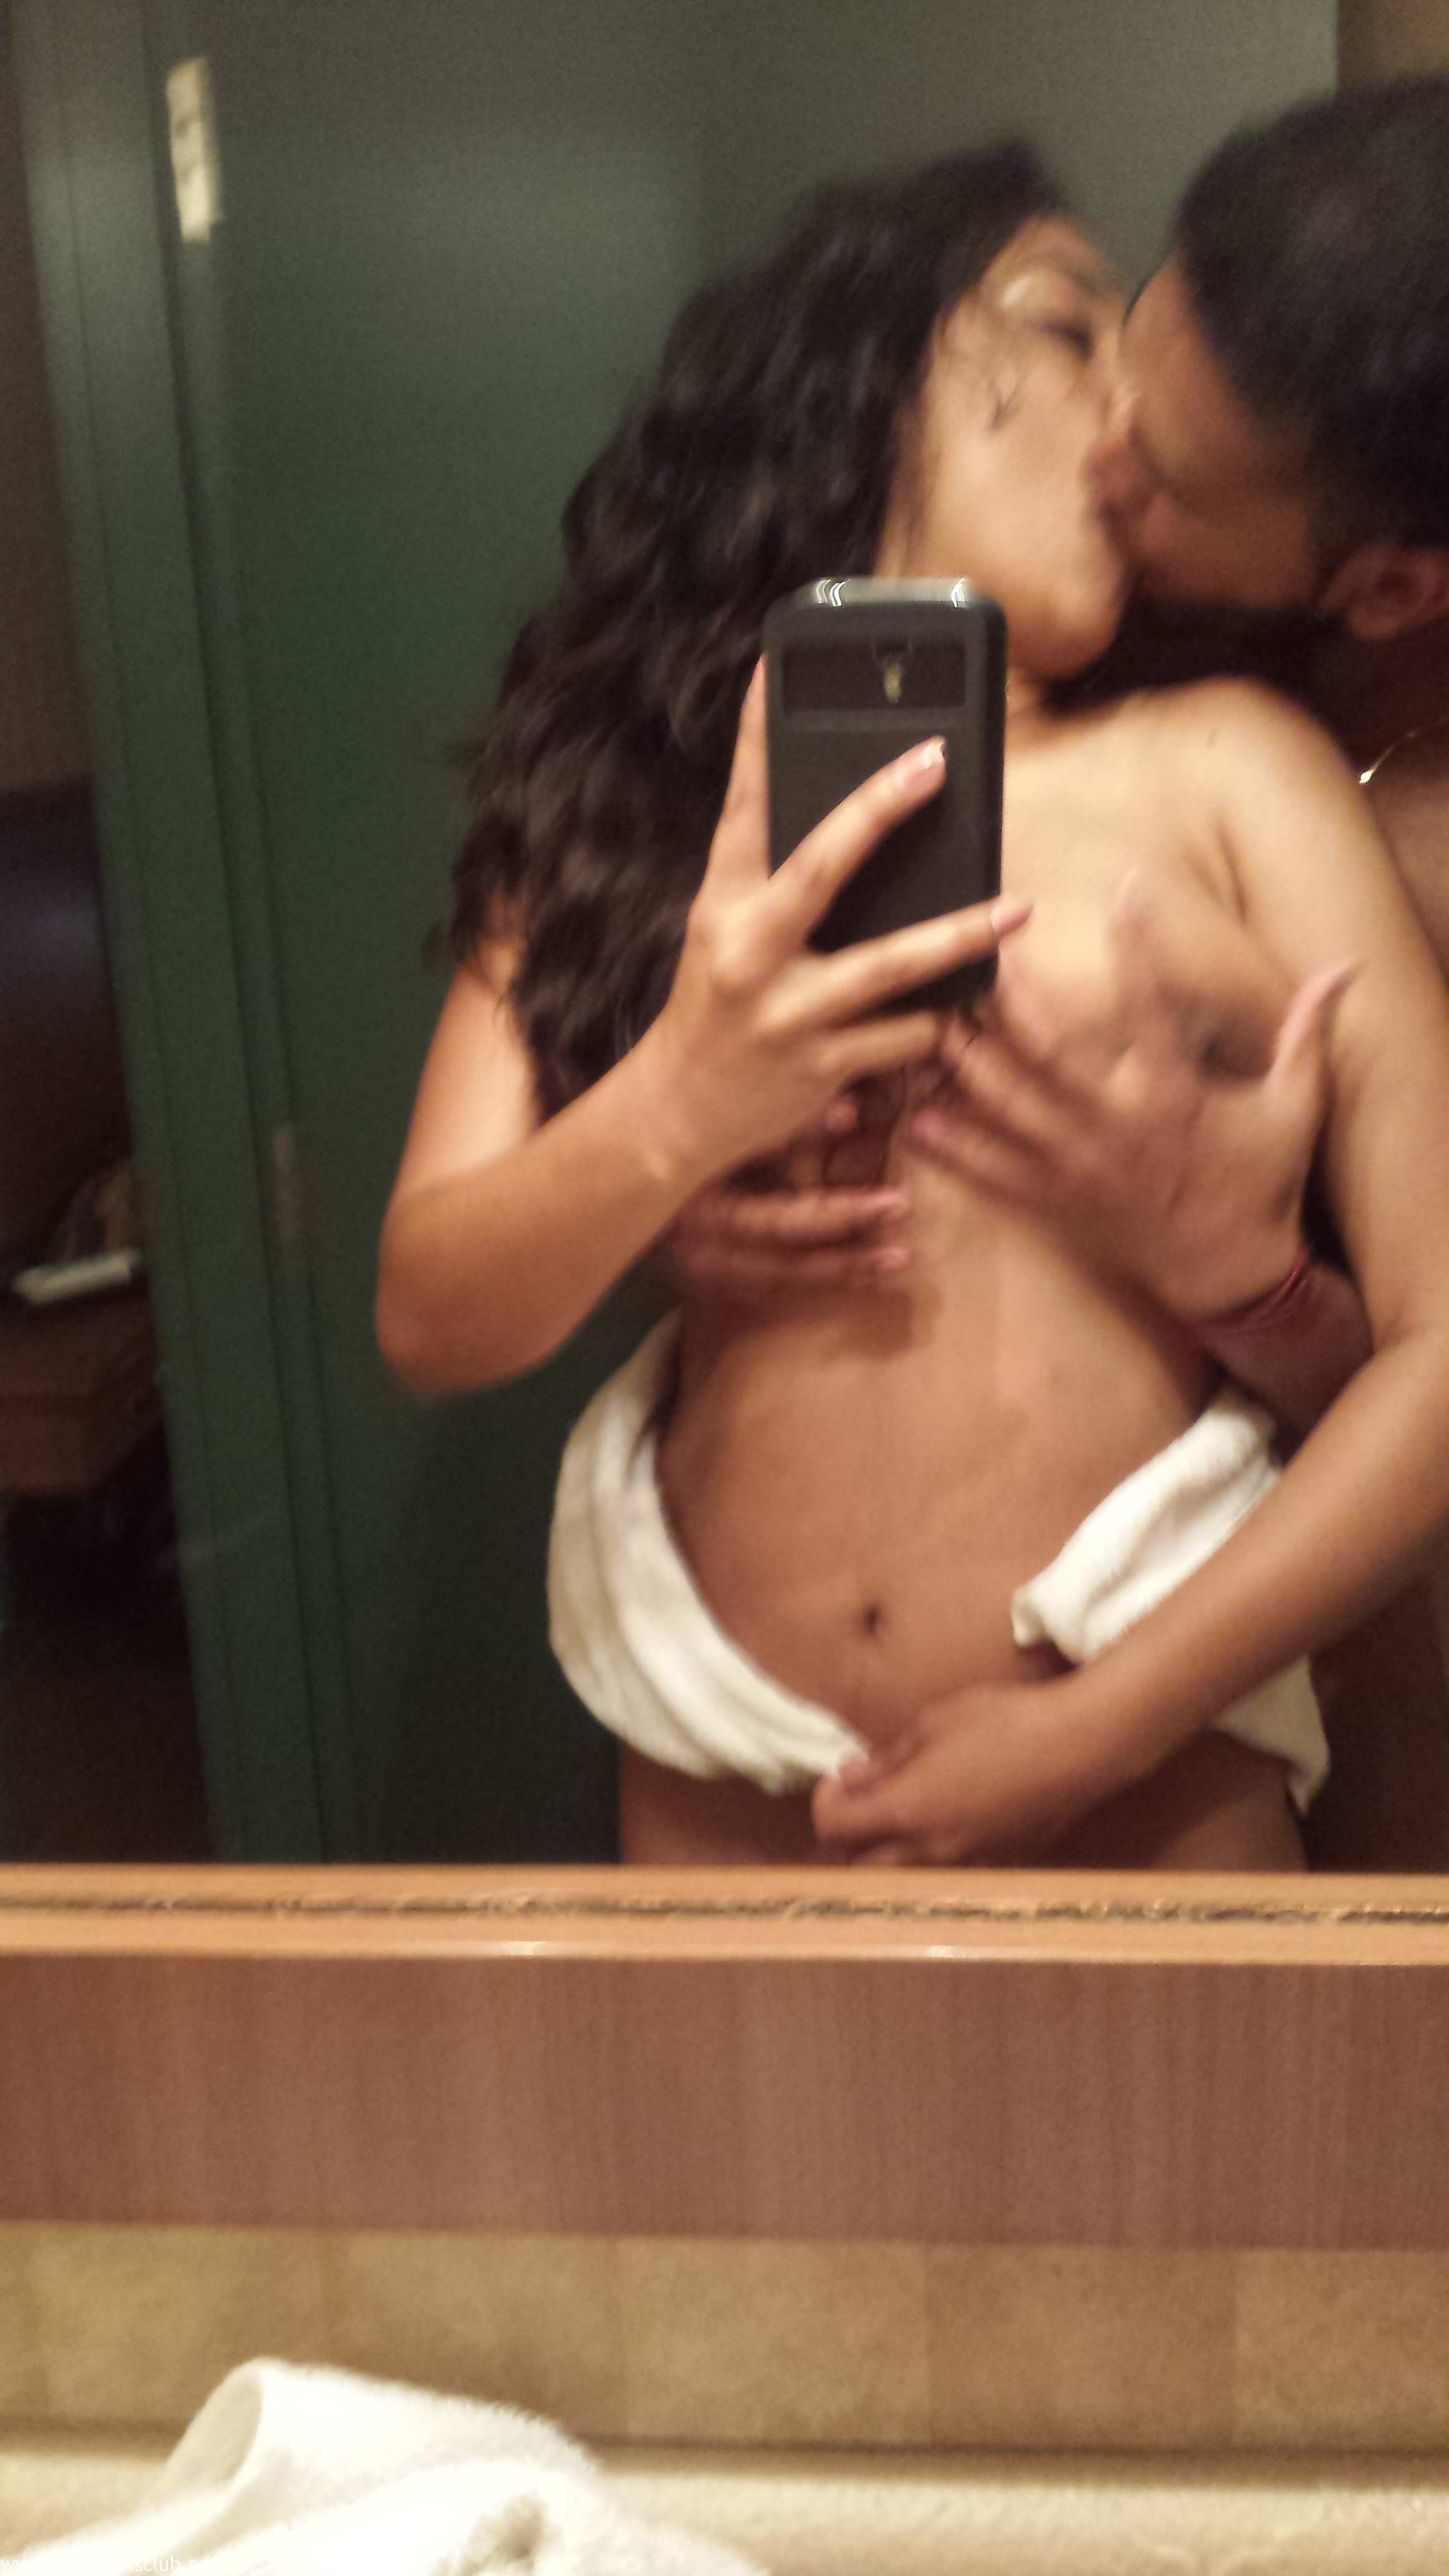 naked couple selfies